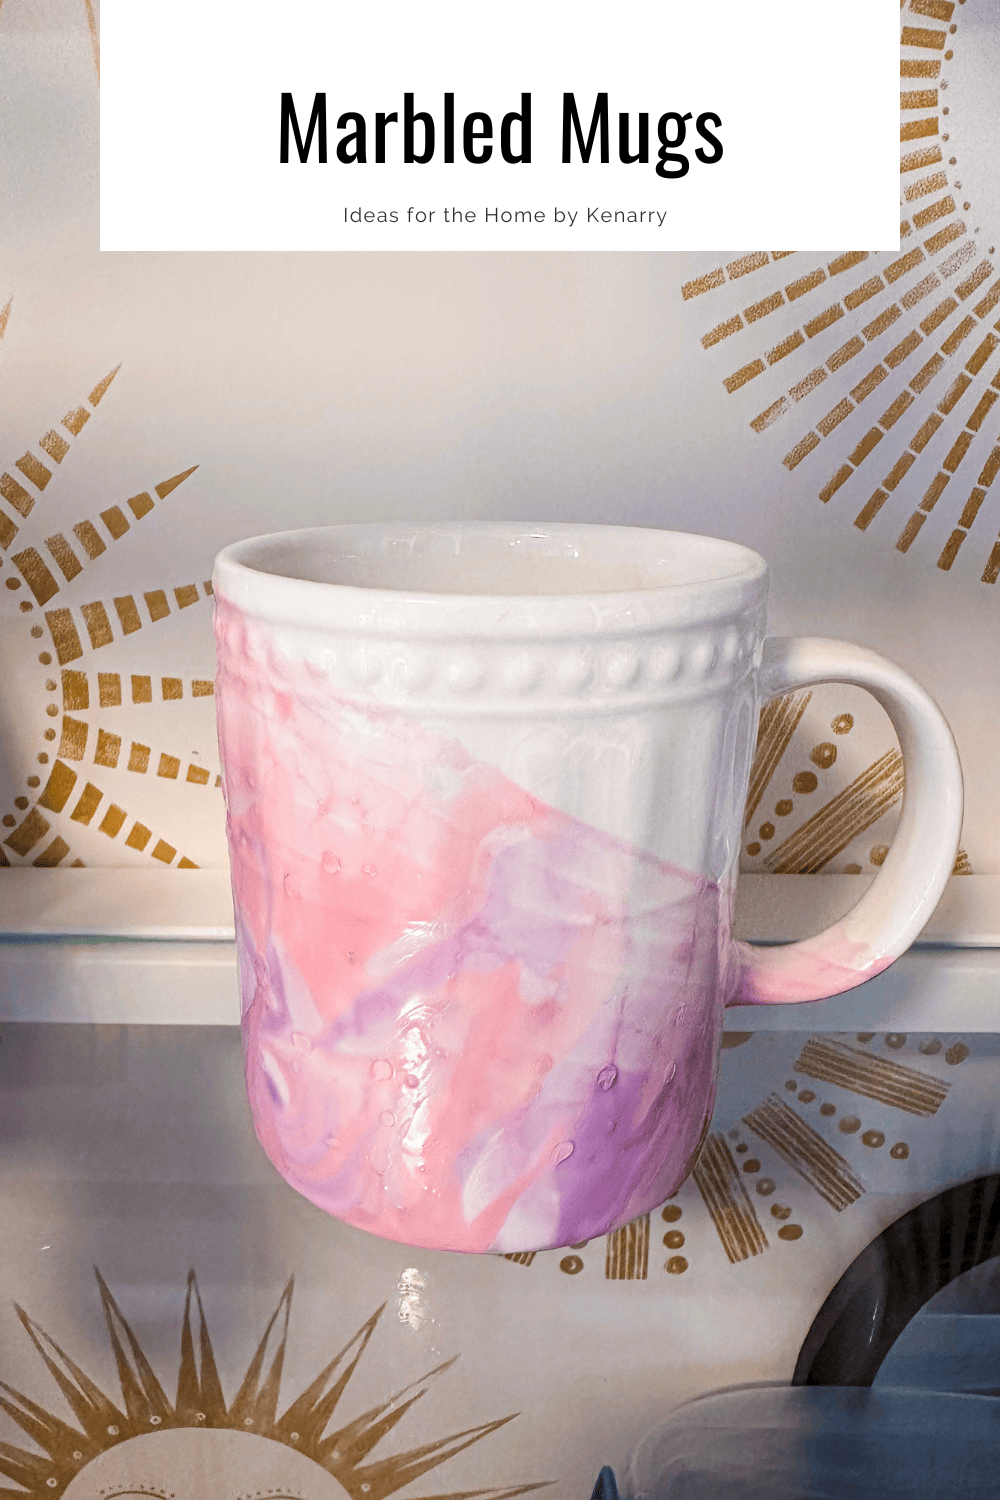 A purple and pink marbled mug